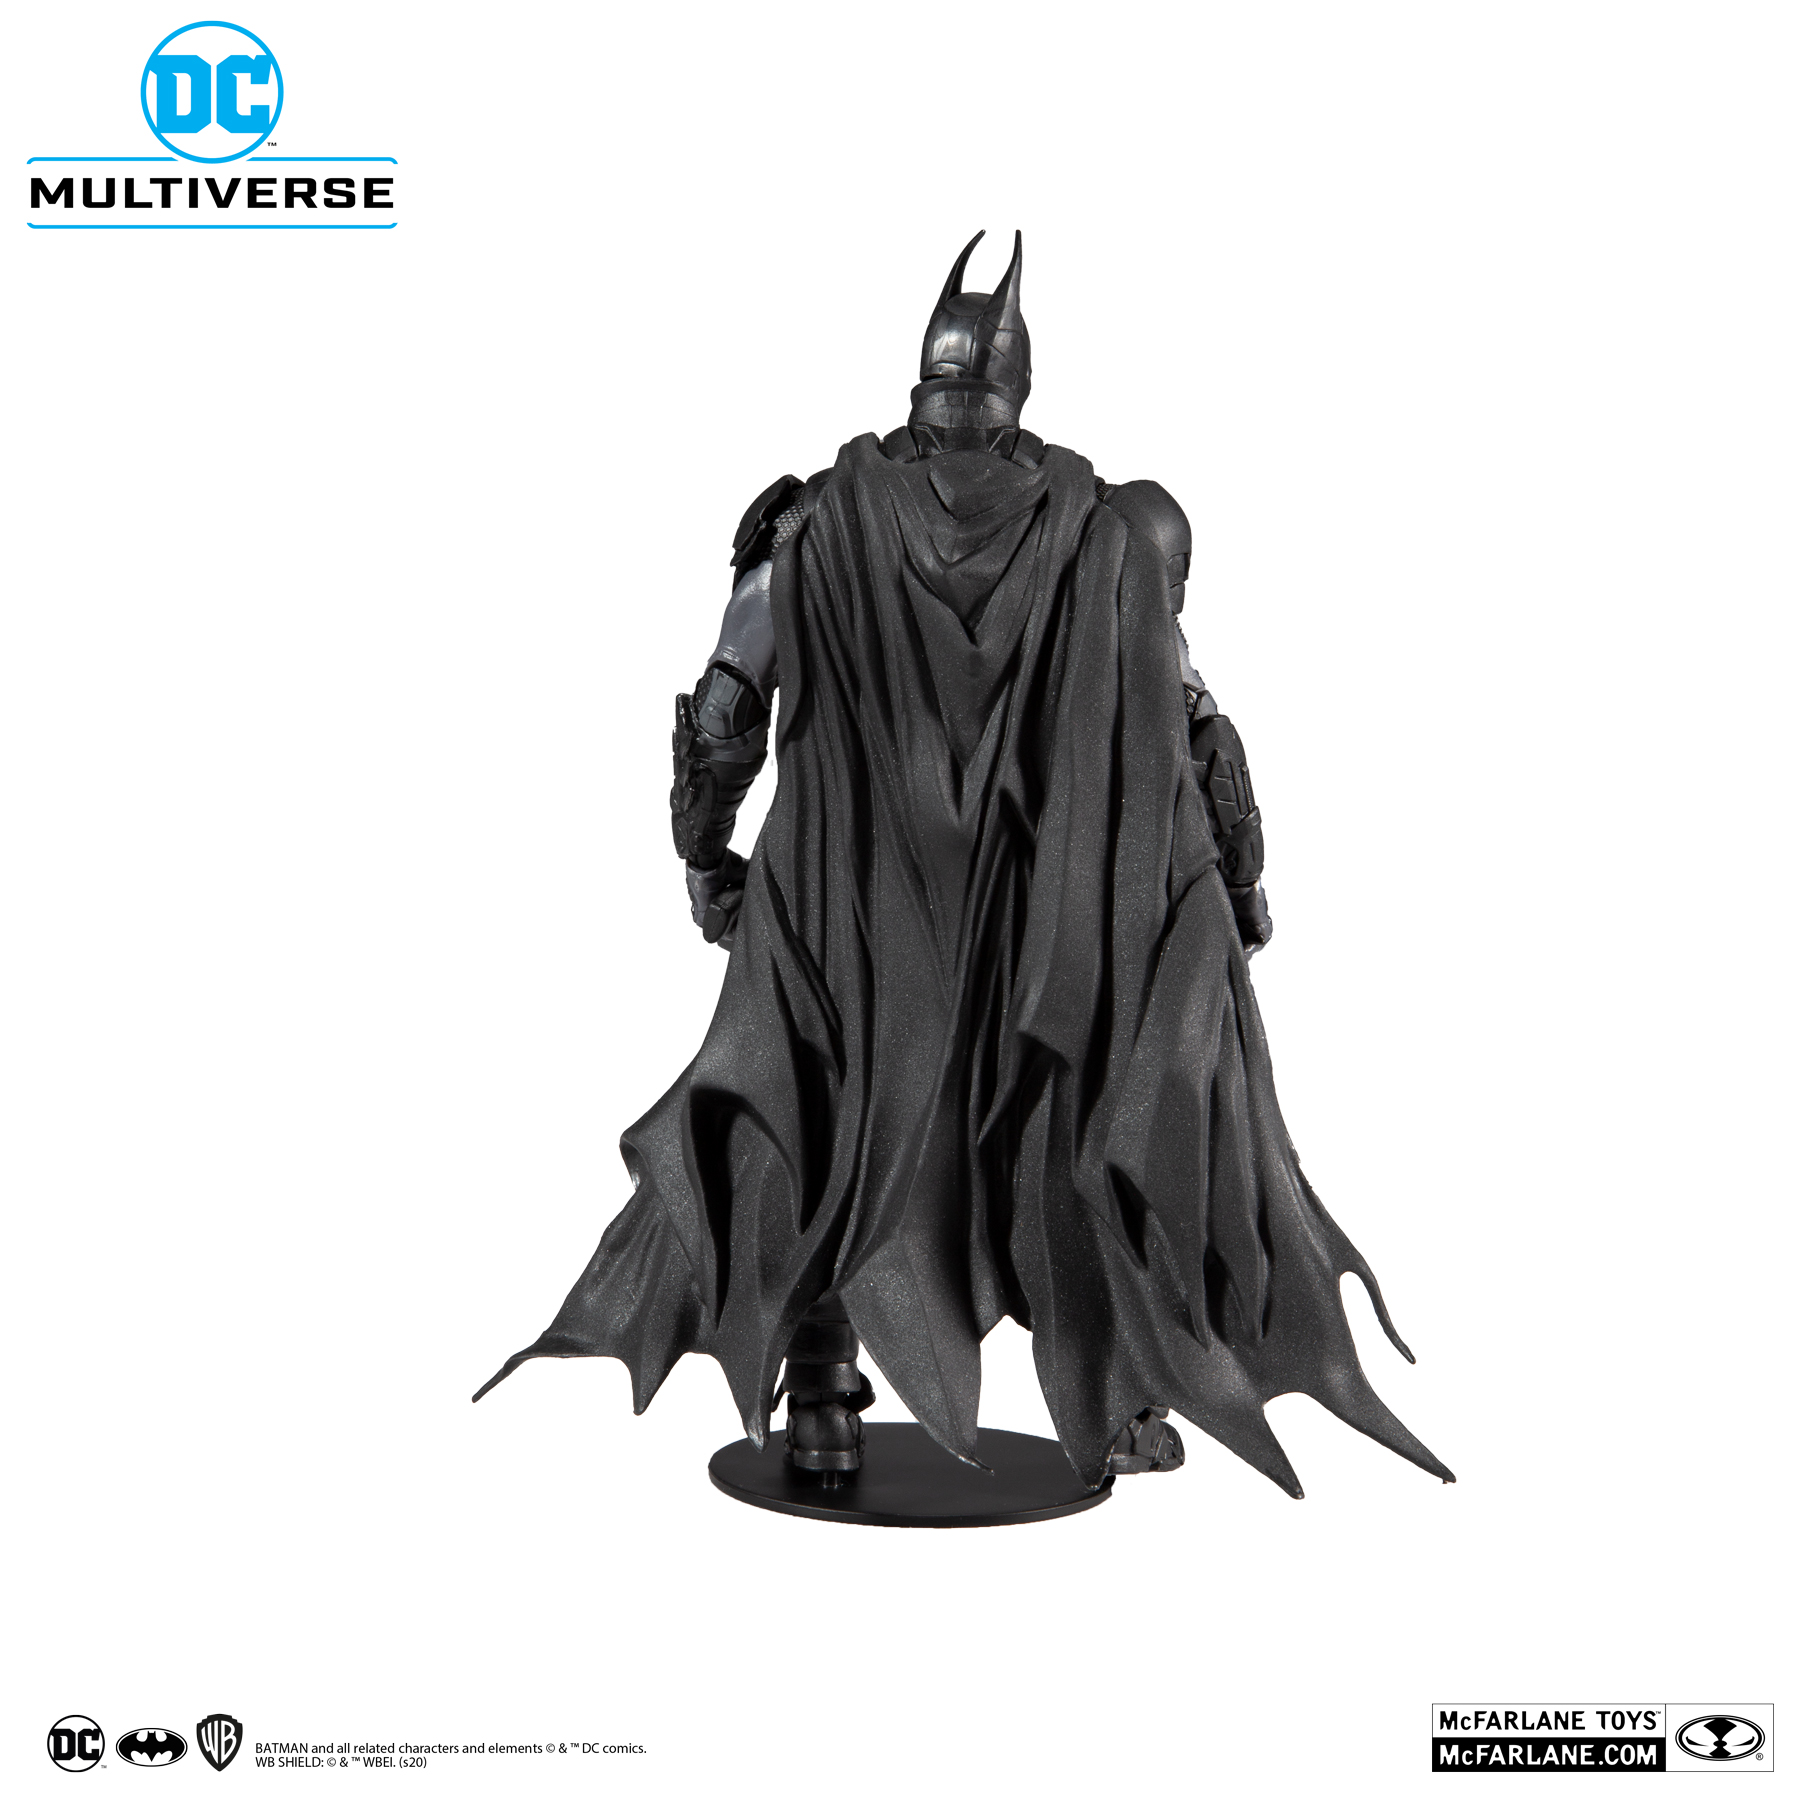 McFarlane-Toys-DC-Multiverse-Arkham-Knight-Batman-Promo-03.jpg